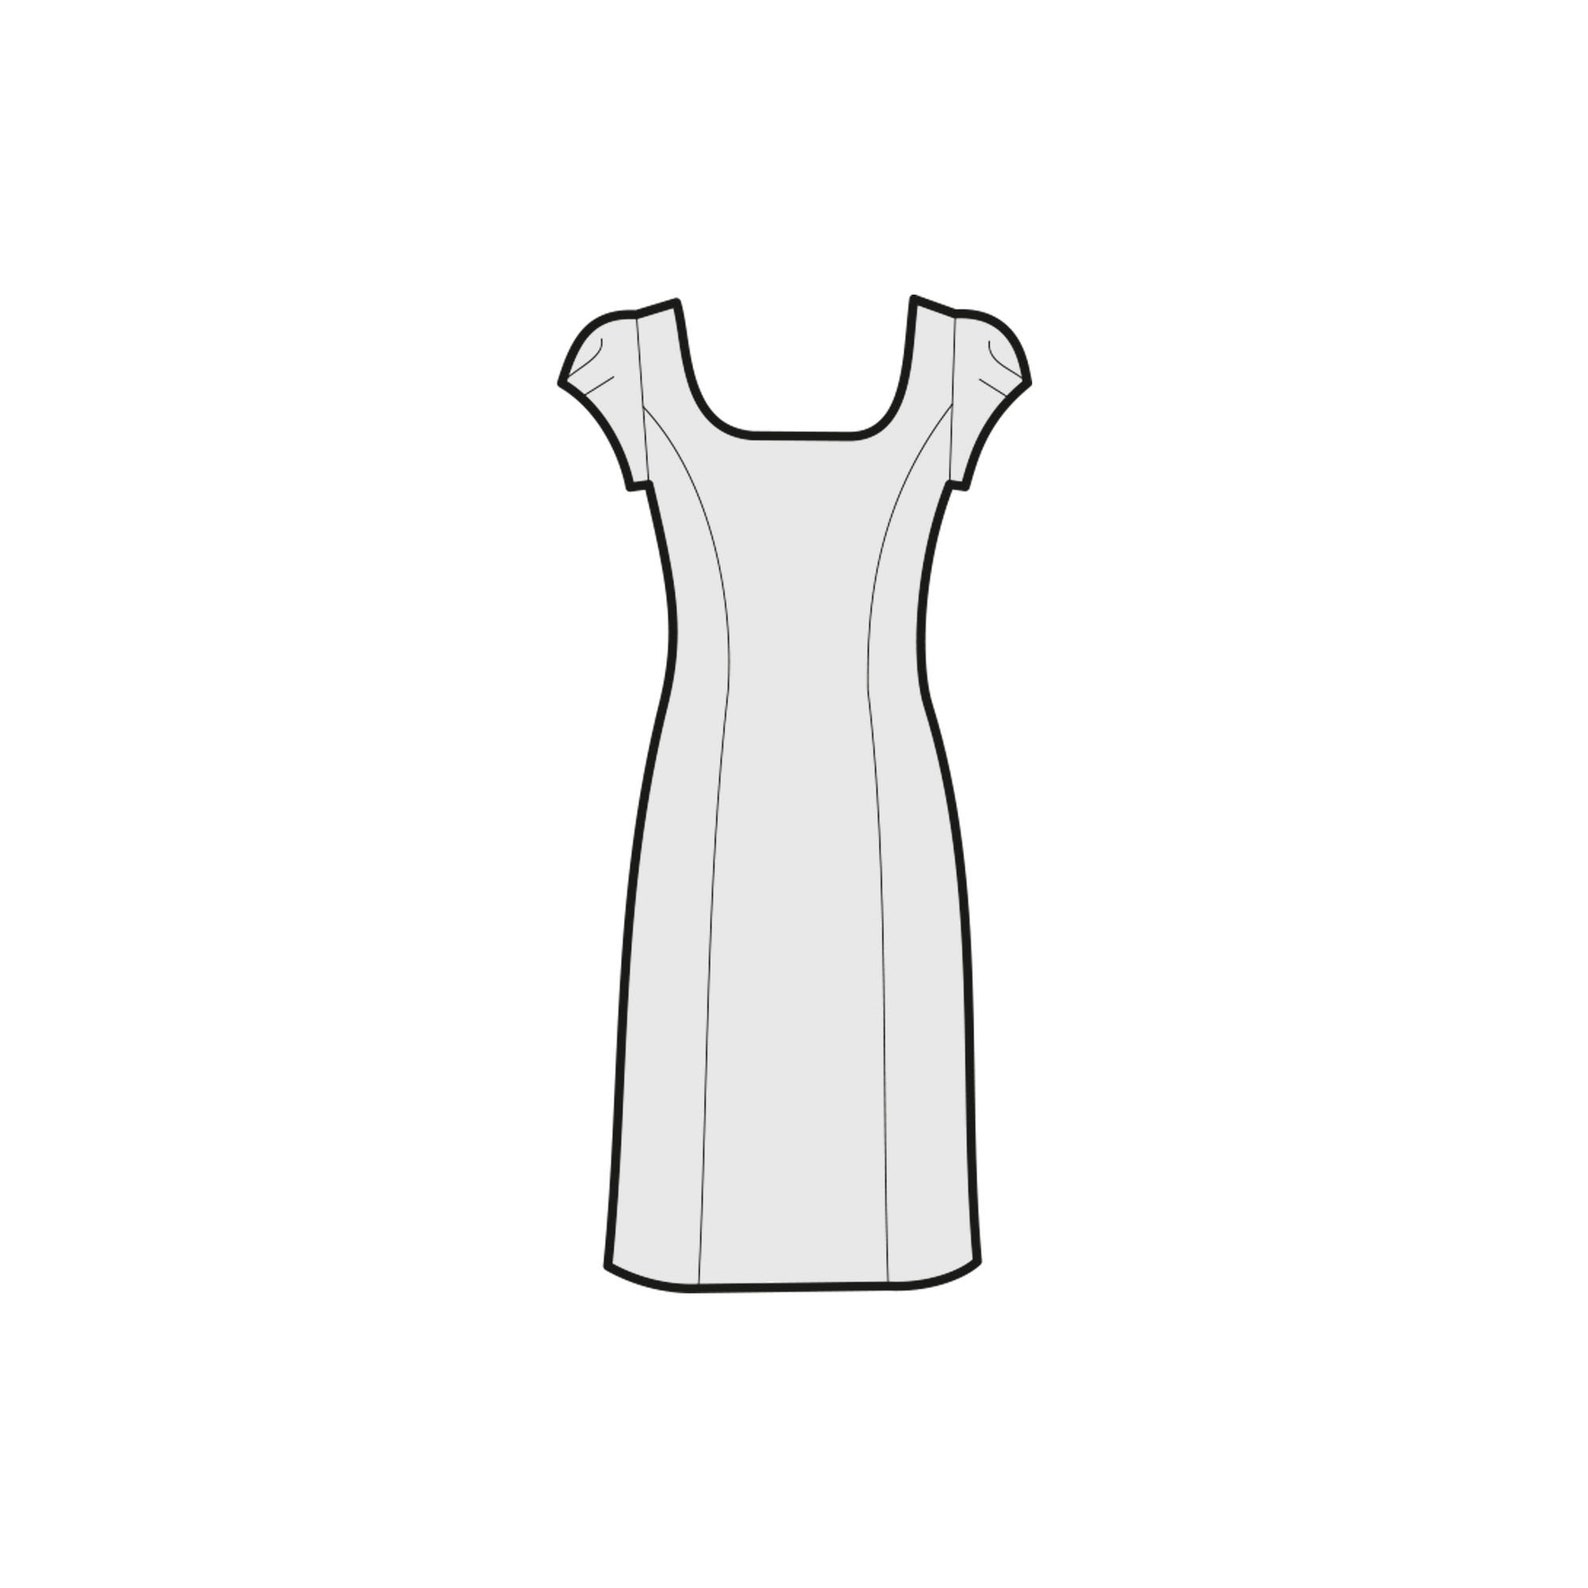 Sheath dress sewing pattern pdf-elegant dress-Sizes | Etsy